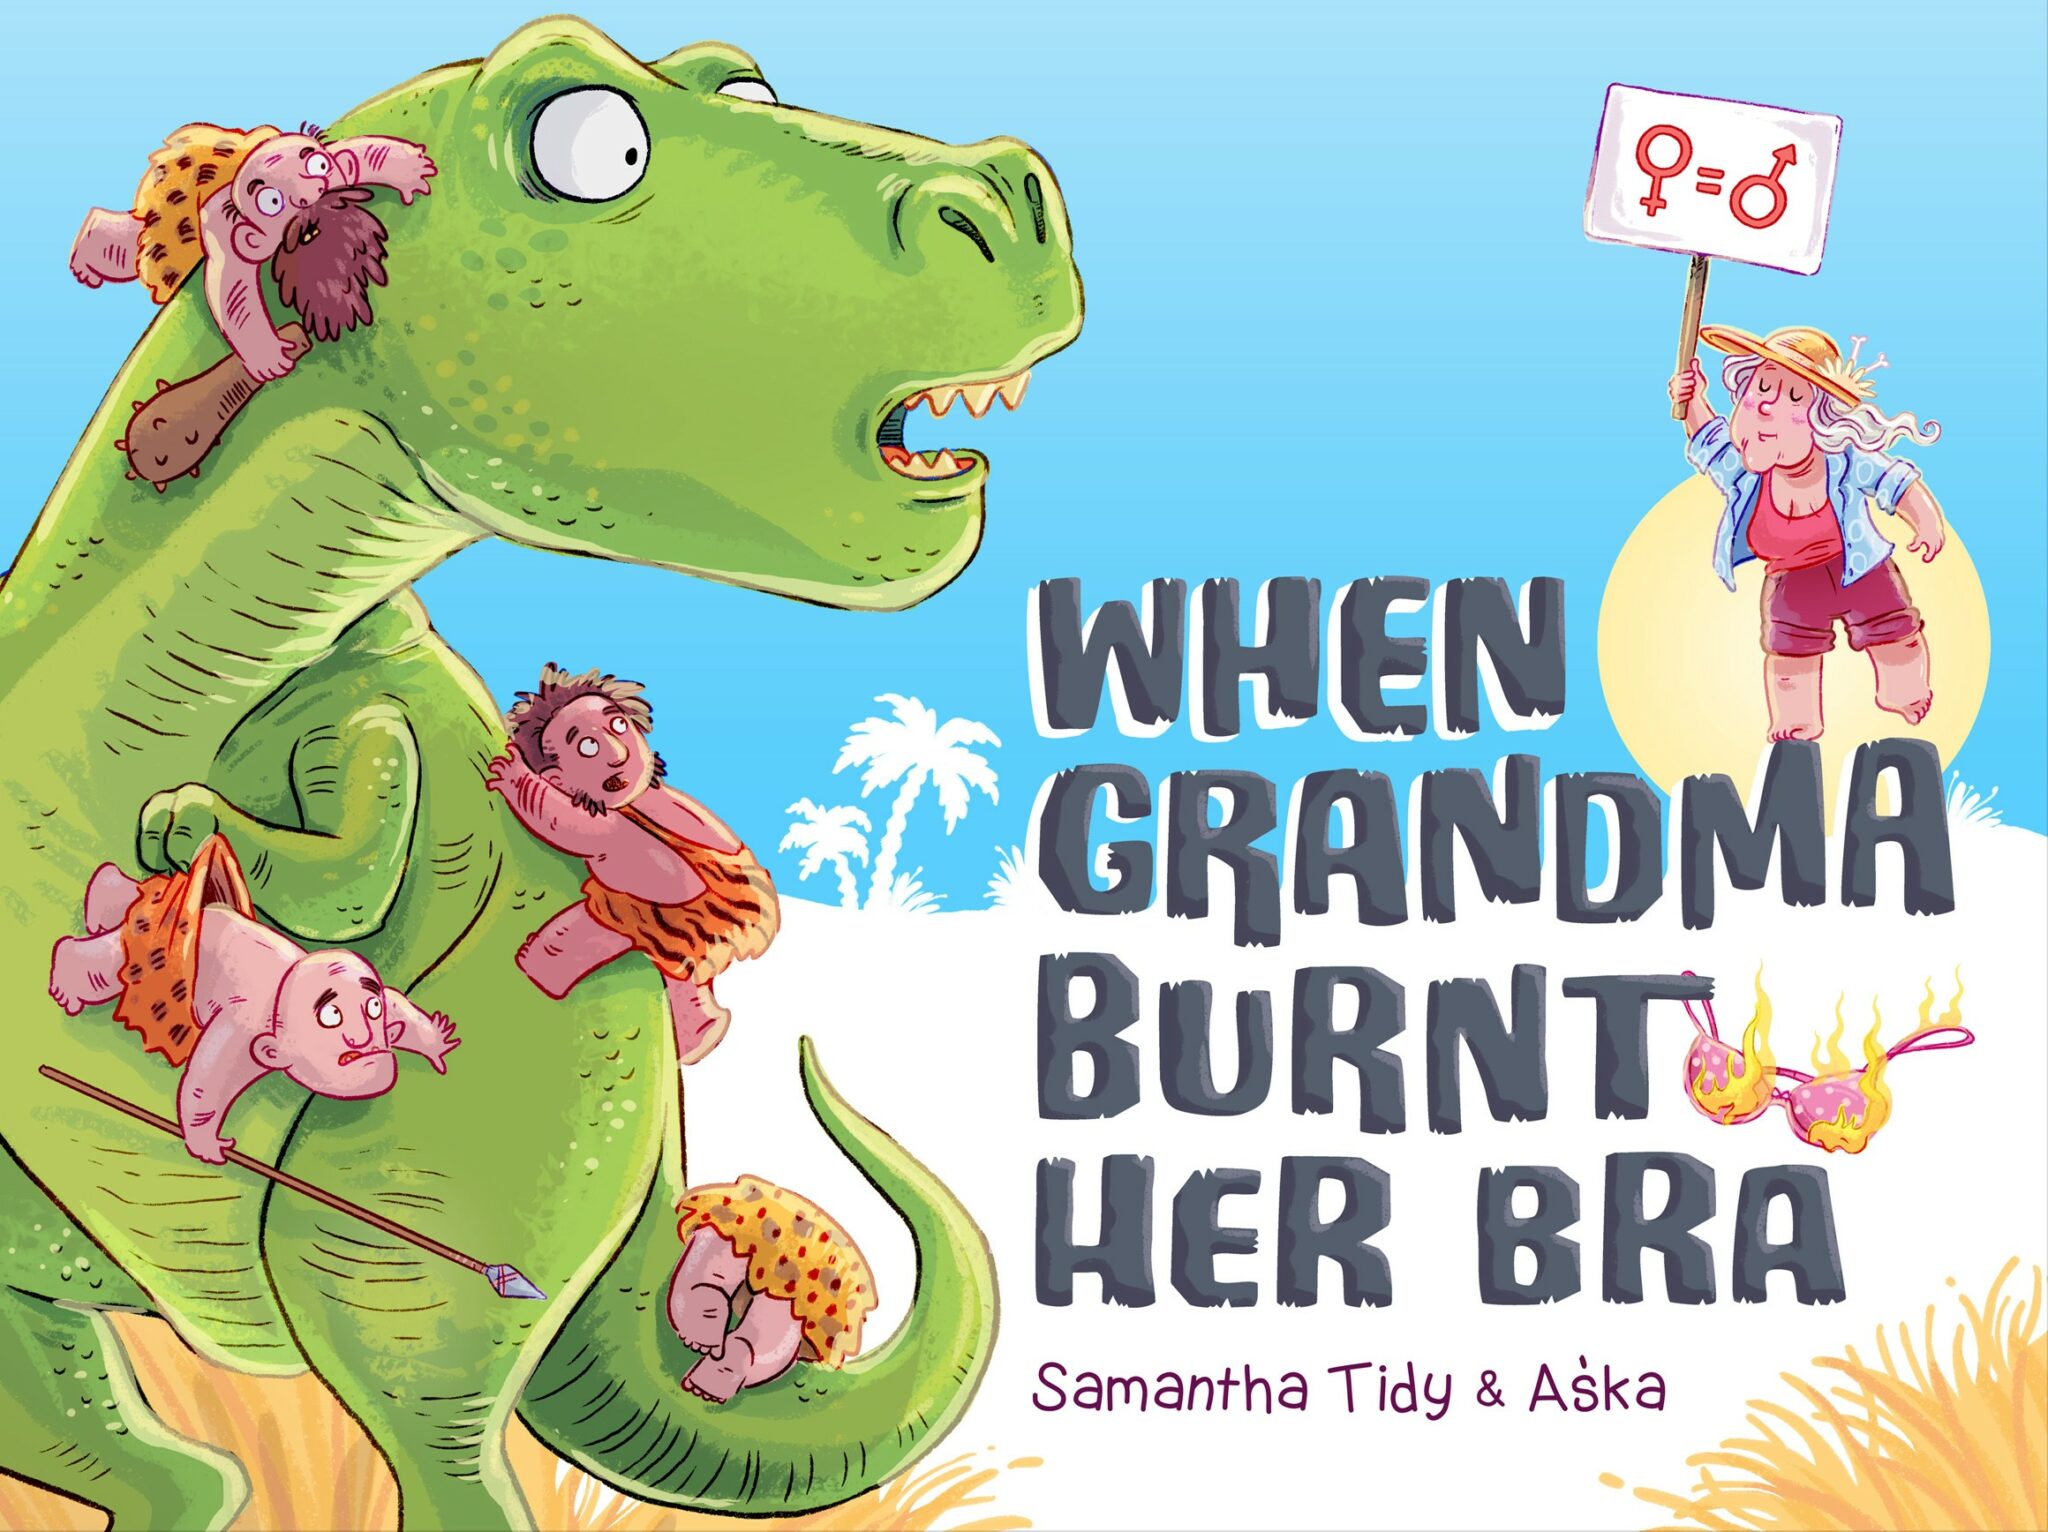 When Grandma Burnt her bra